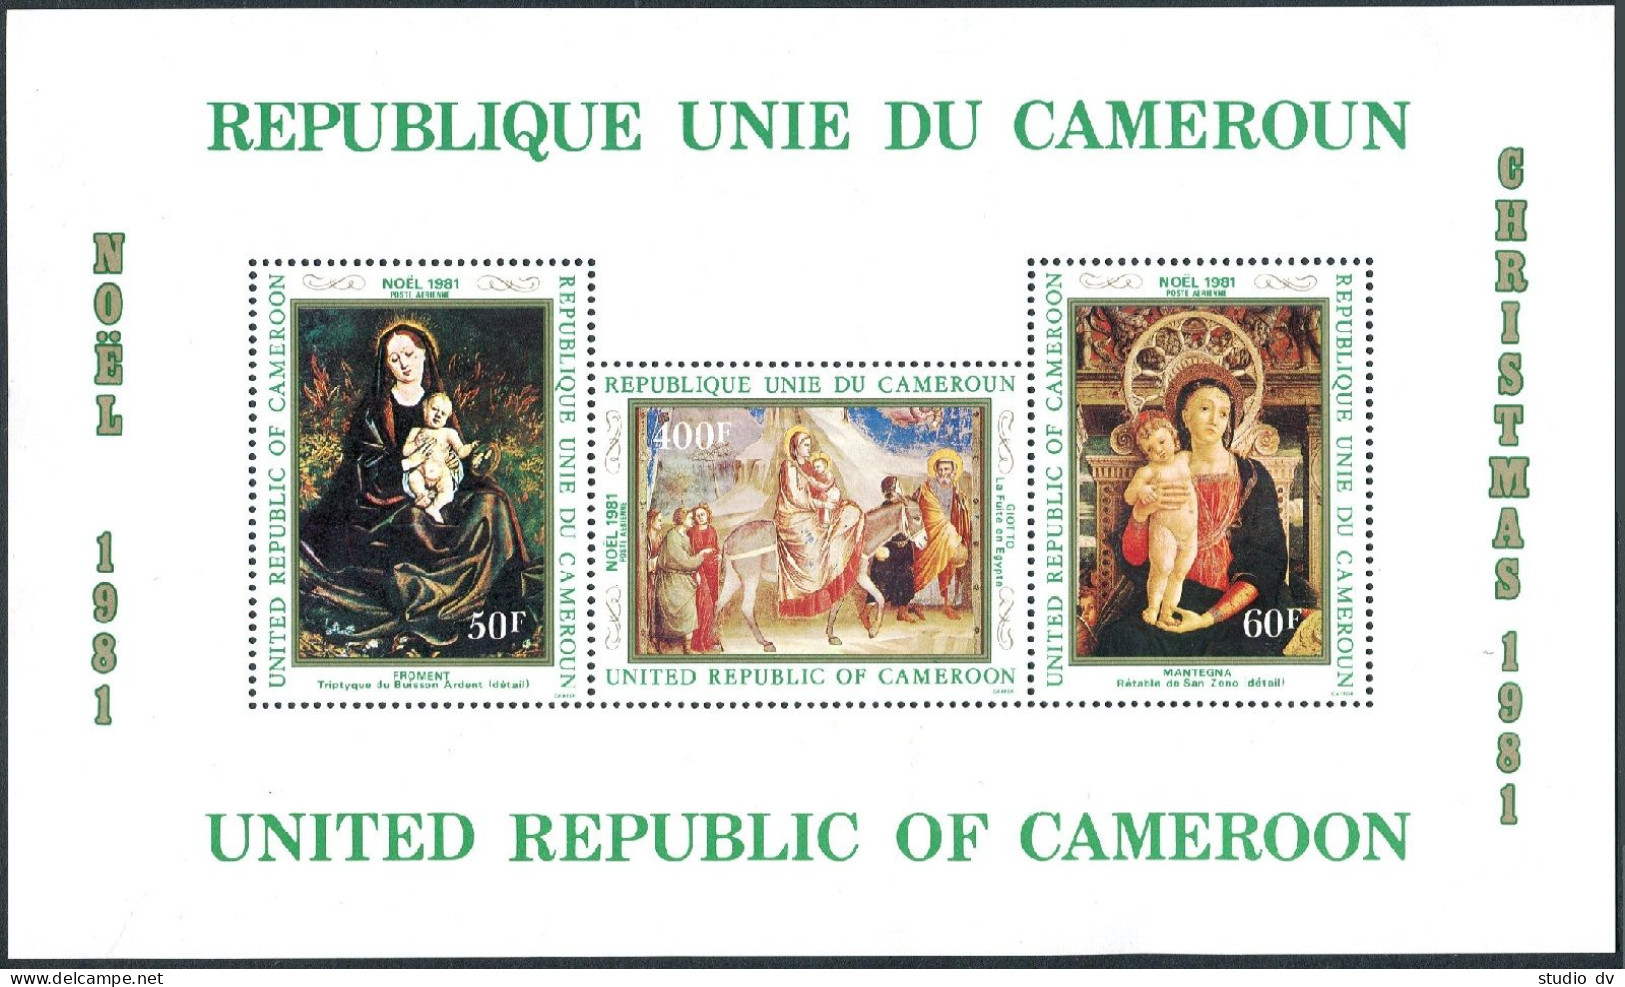 Cameroun C299a Sheet, MNH. Mi Bl.19. Christmas 1981. Froment, Mantegna, Giotto. - Cameroon (1960-...)